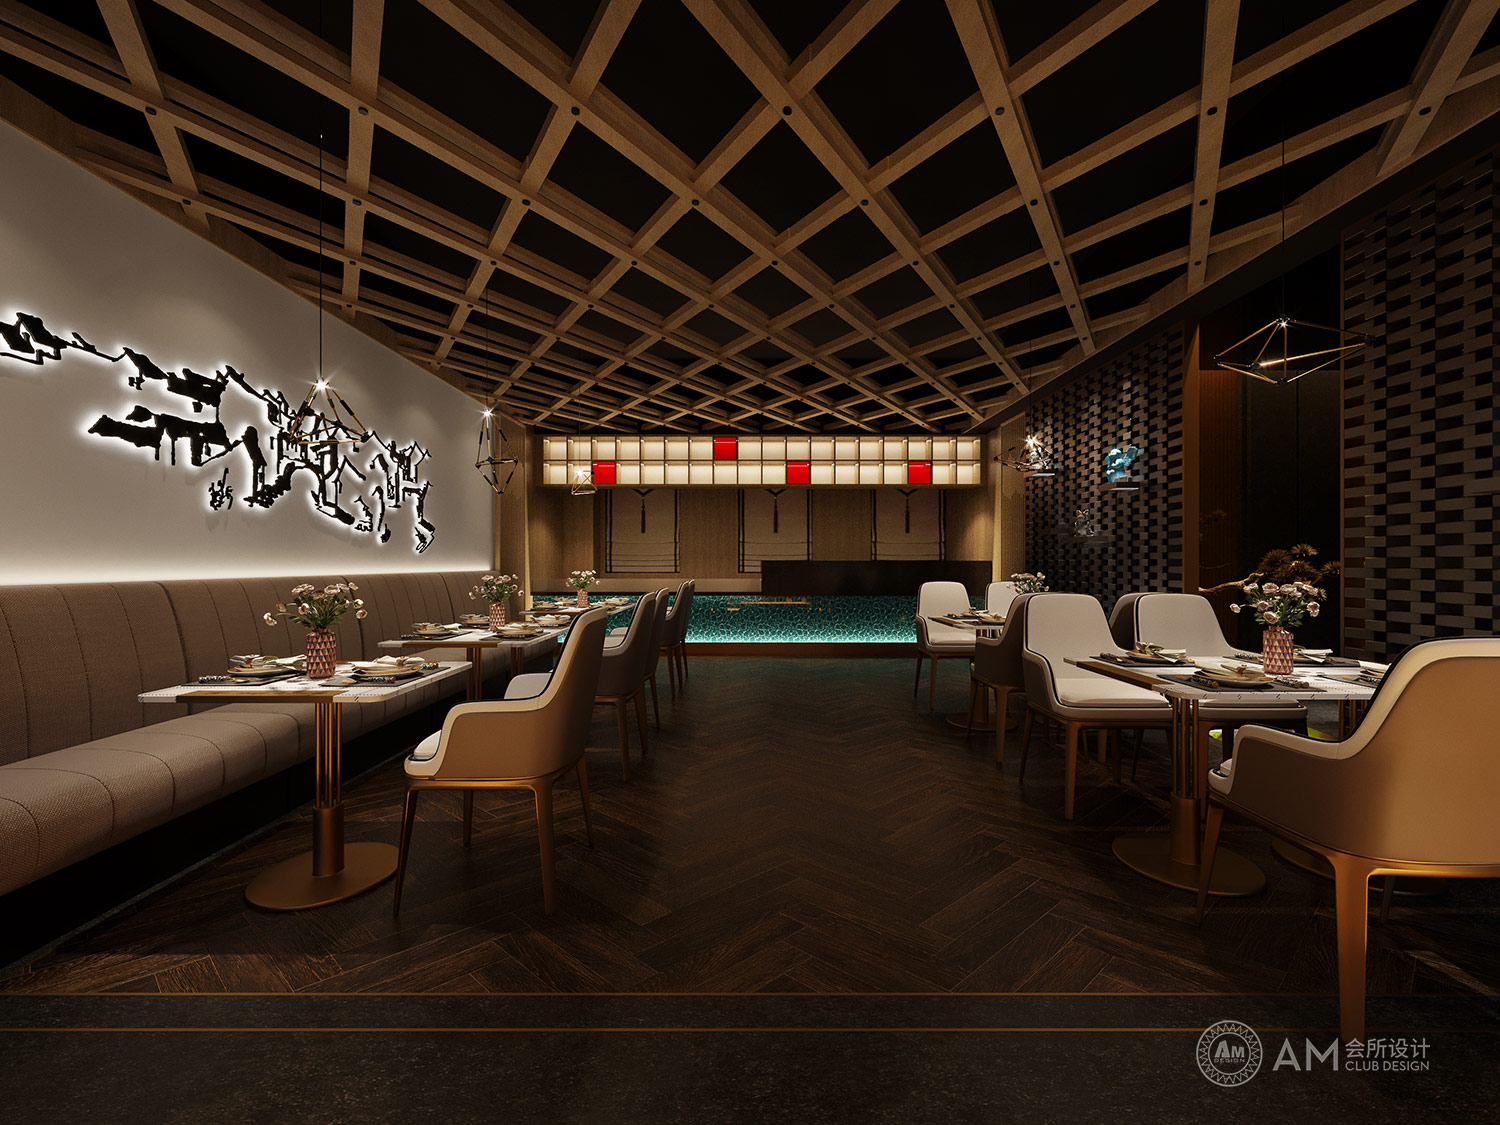 AM DESIGN | Dining area design of lishiyuan Spa Club